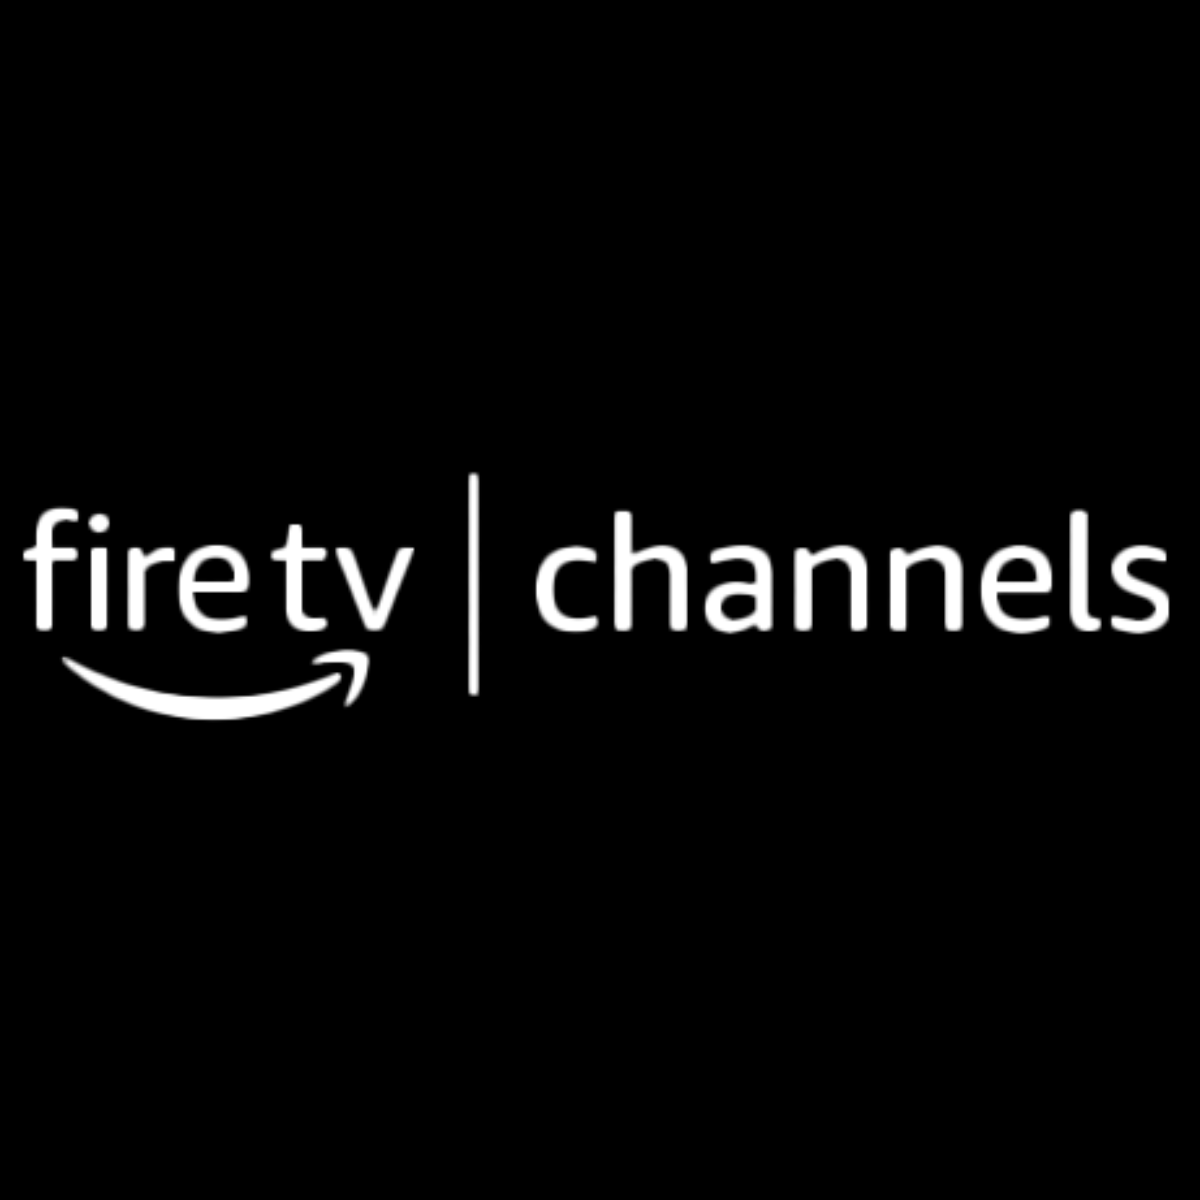 fire tv channels_web(1).png